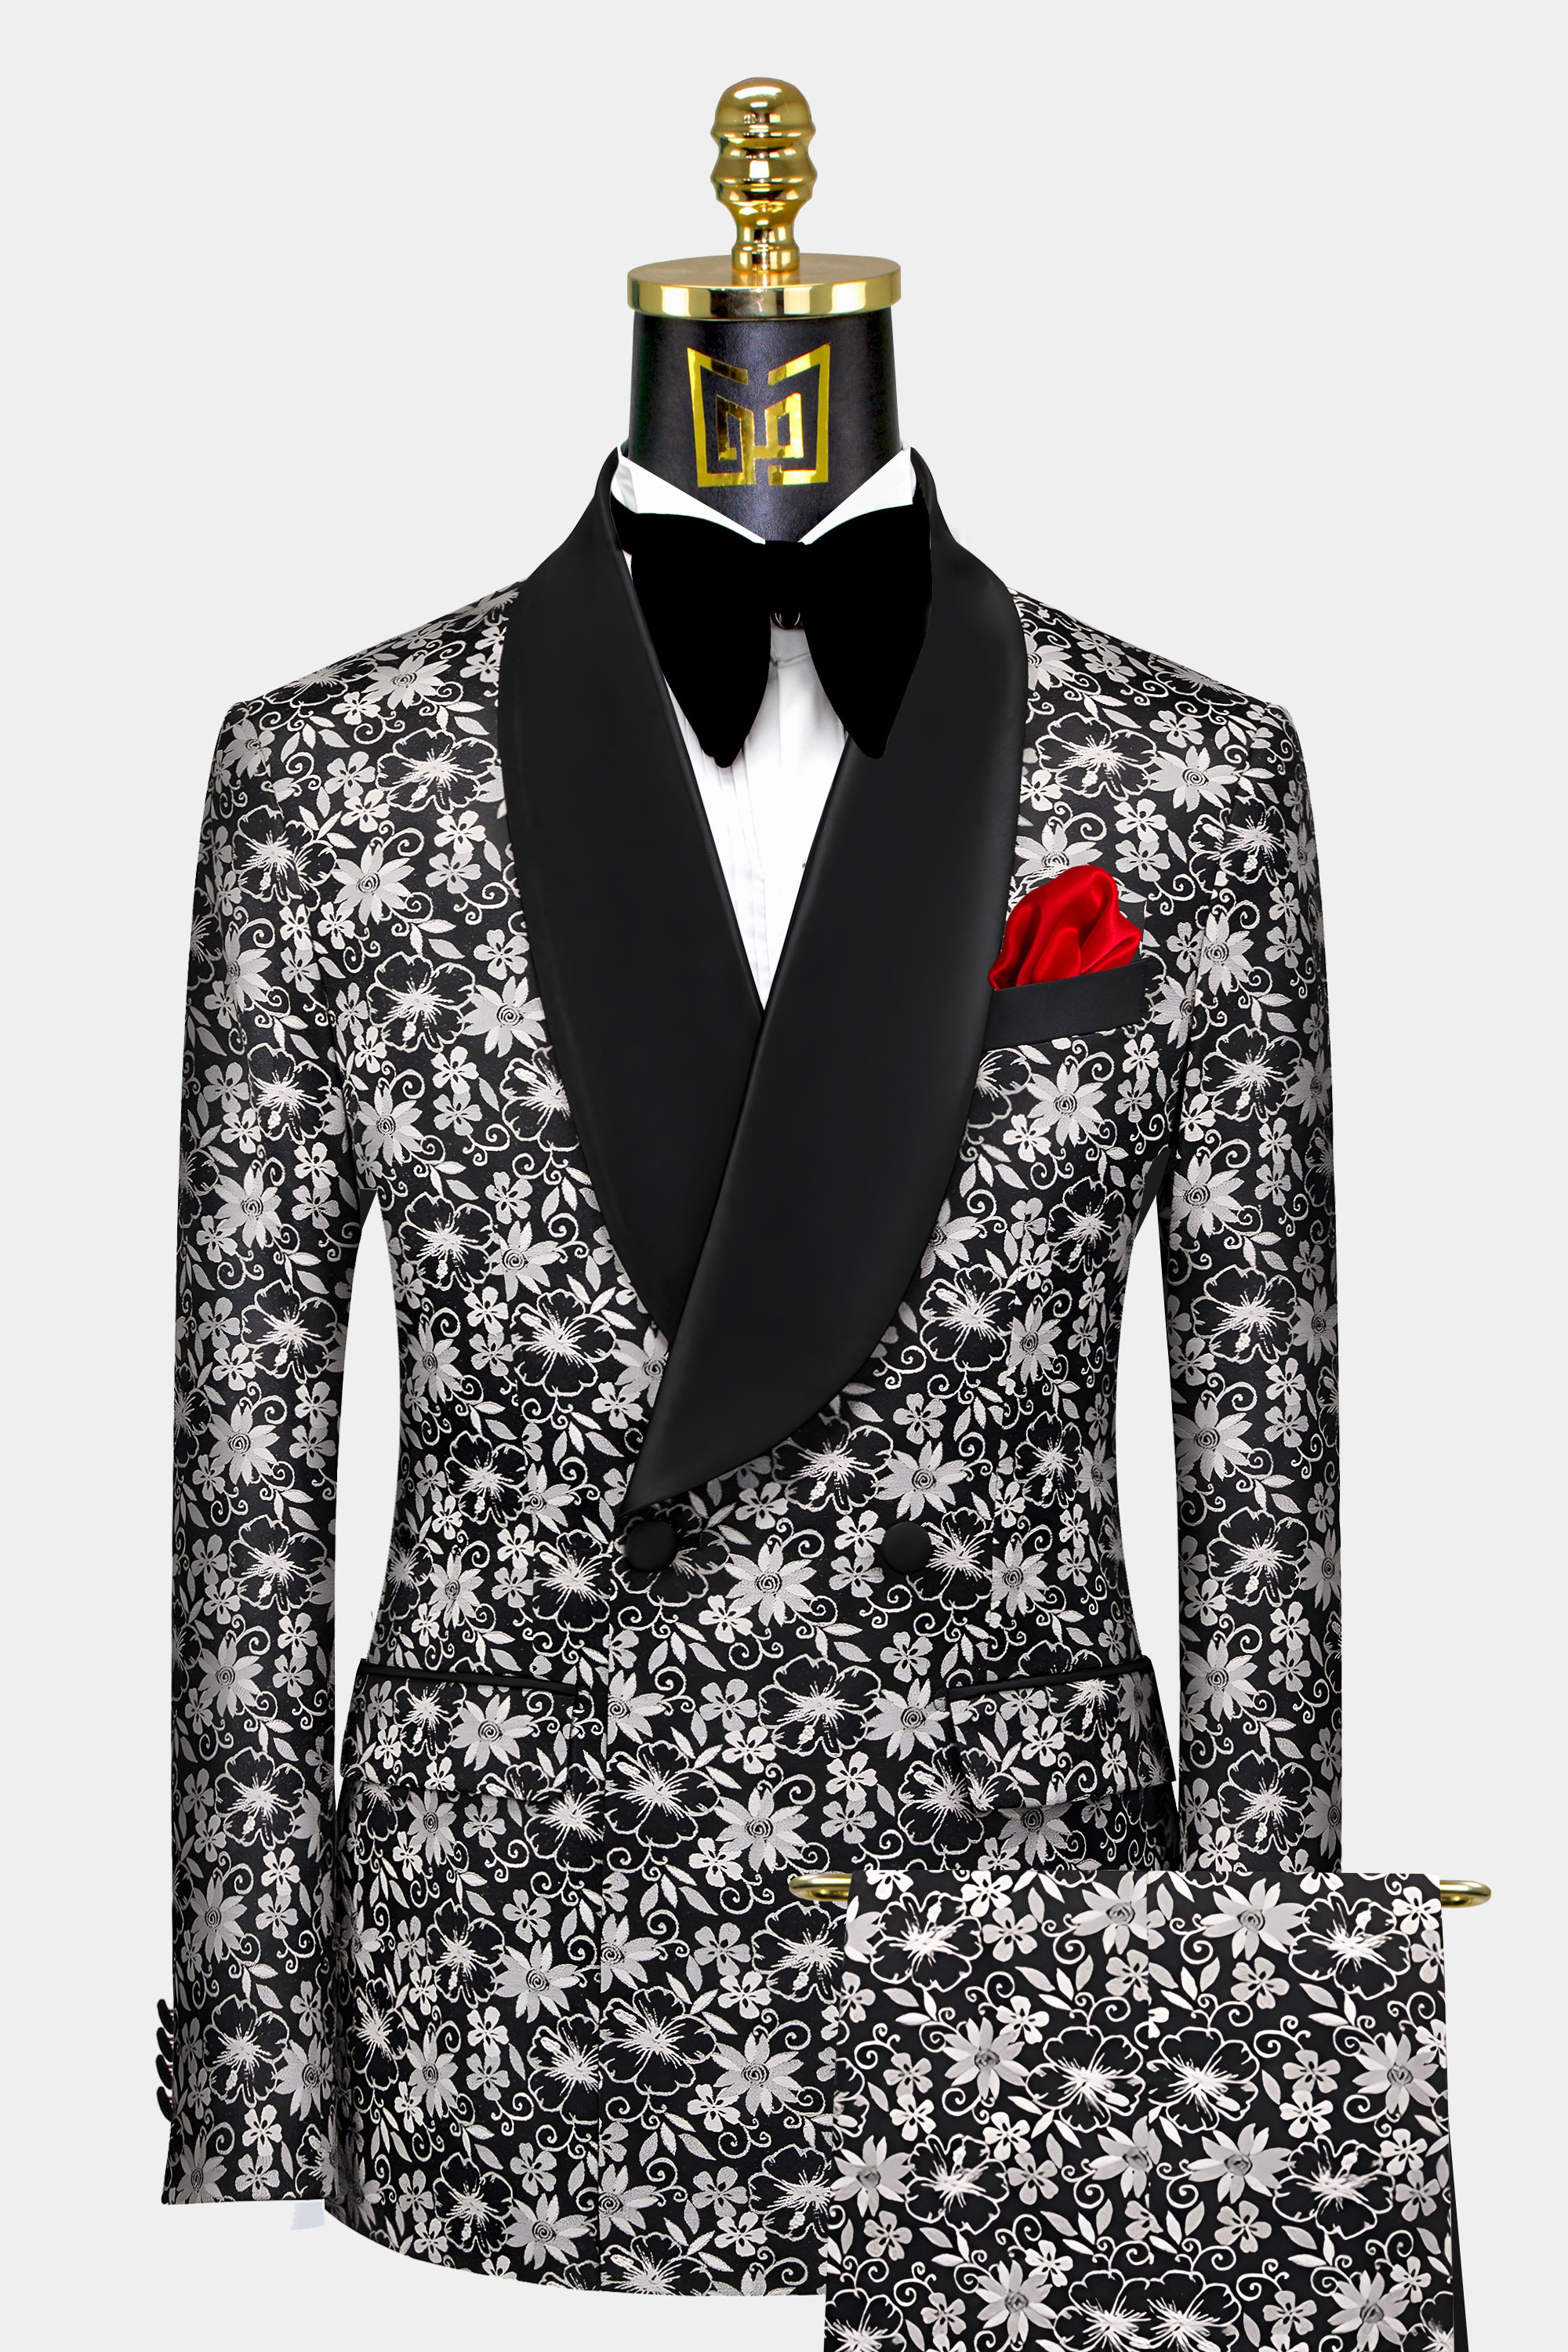 Double-Breasted-Floral-Tuxedo-Wedding-Groom-Prom-Suit-from-Gentlemansguru.com